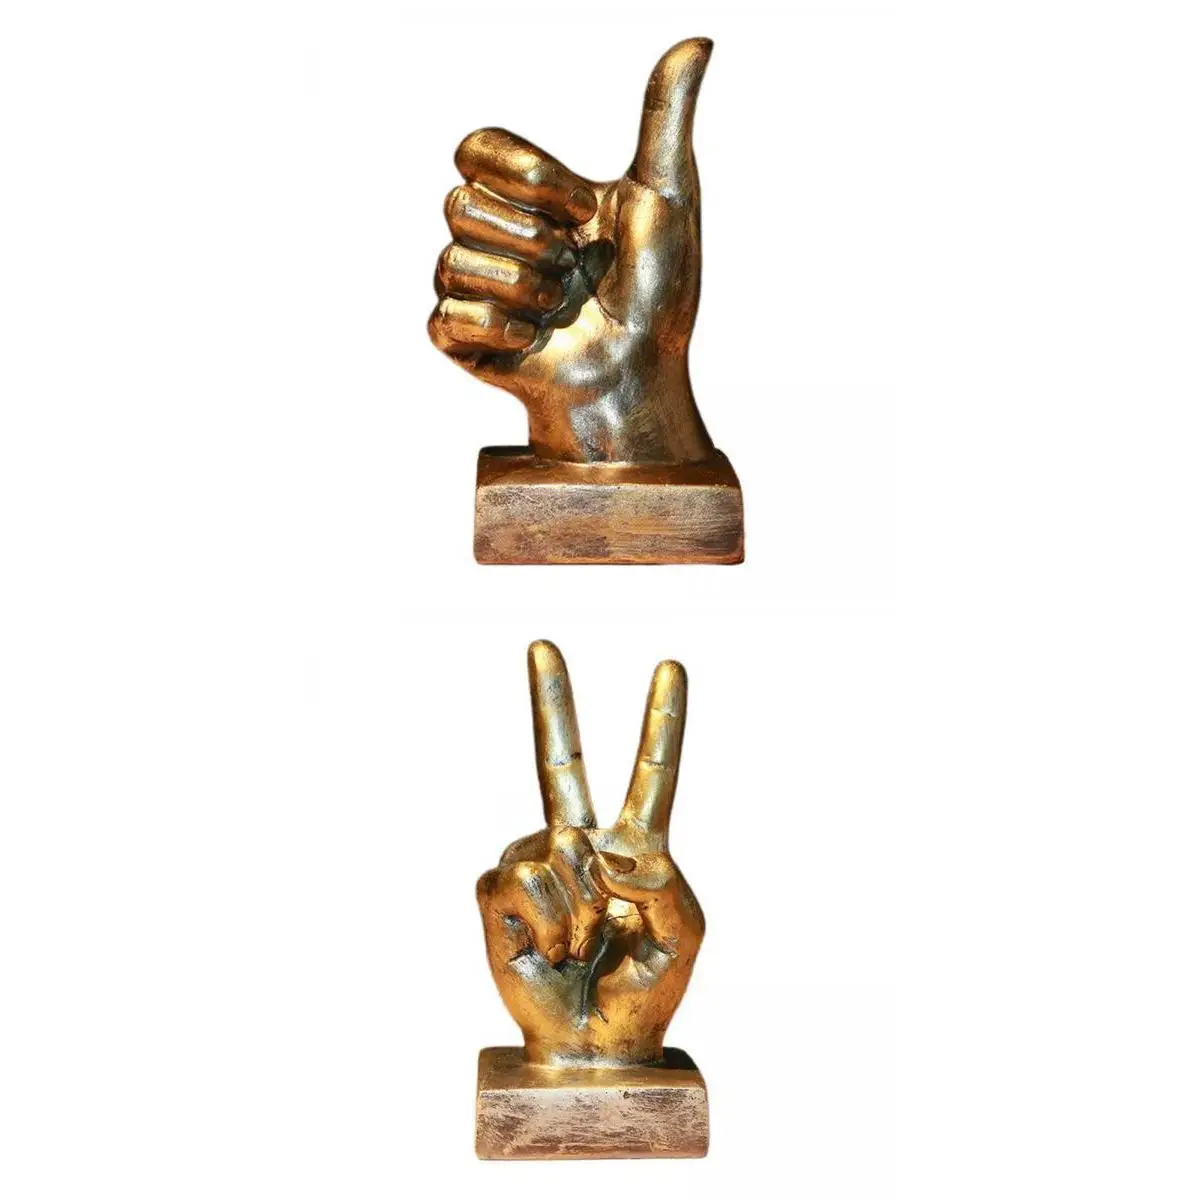 2 Pieces Art Hand Finger Gesture Sculpture Ornament Figurine Statue Decor